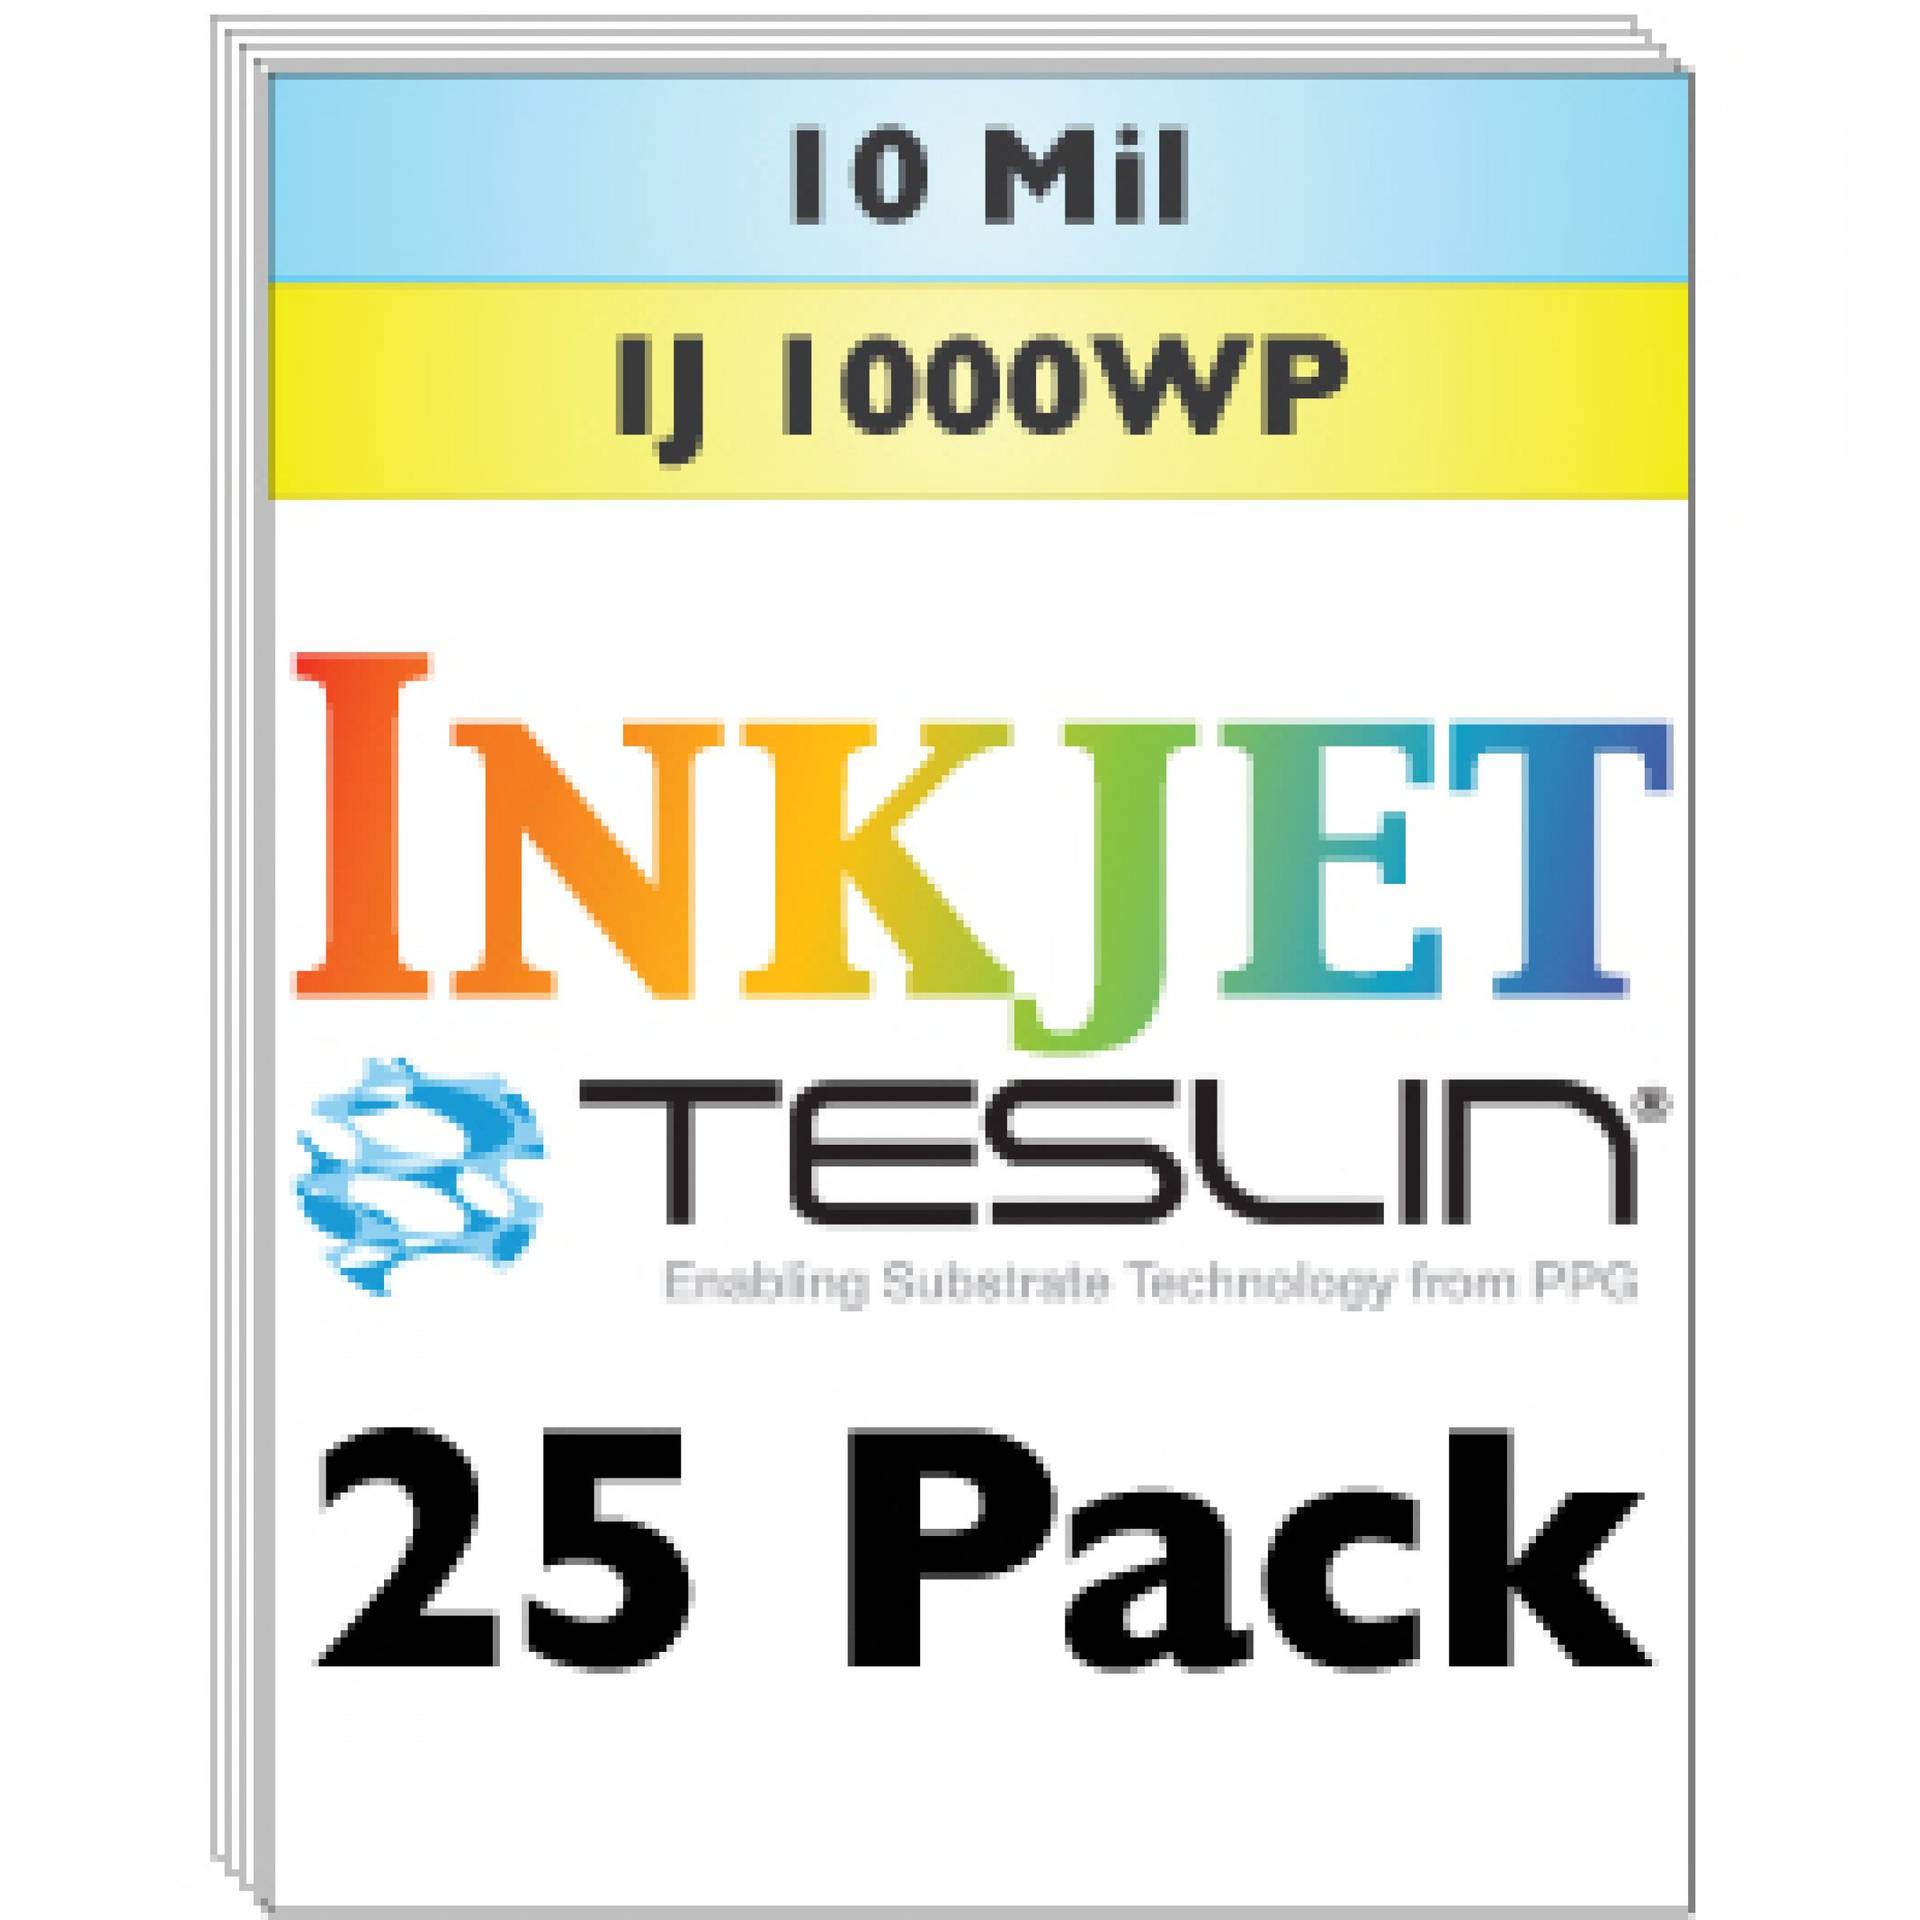 Inkjet Teslin IJ 1000WP Paper - 25 Pack